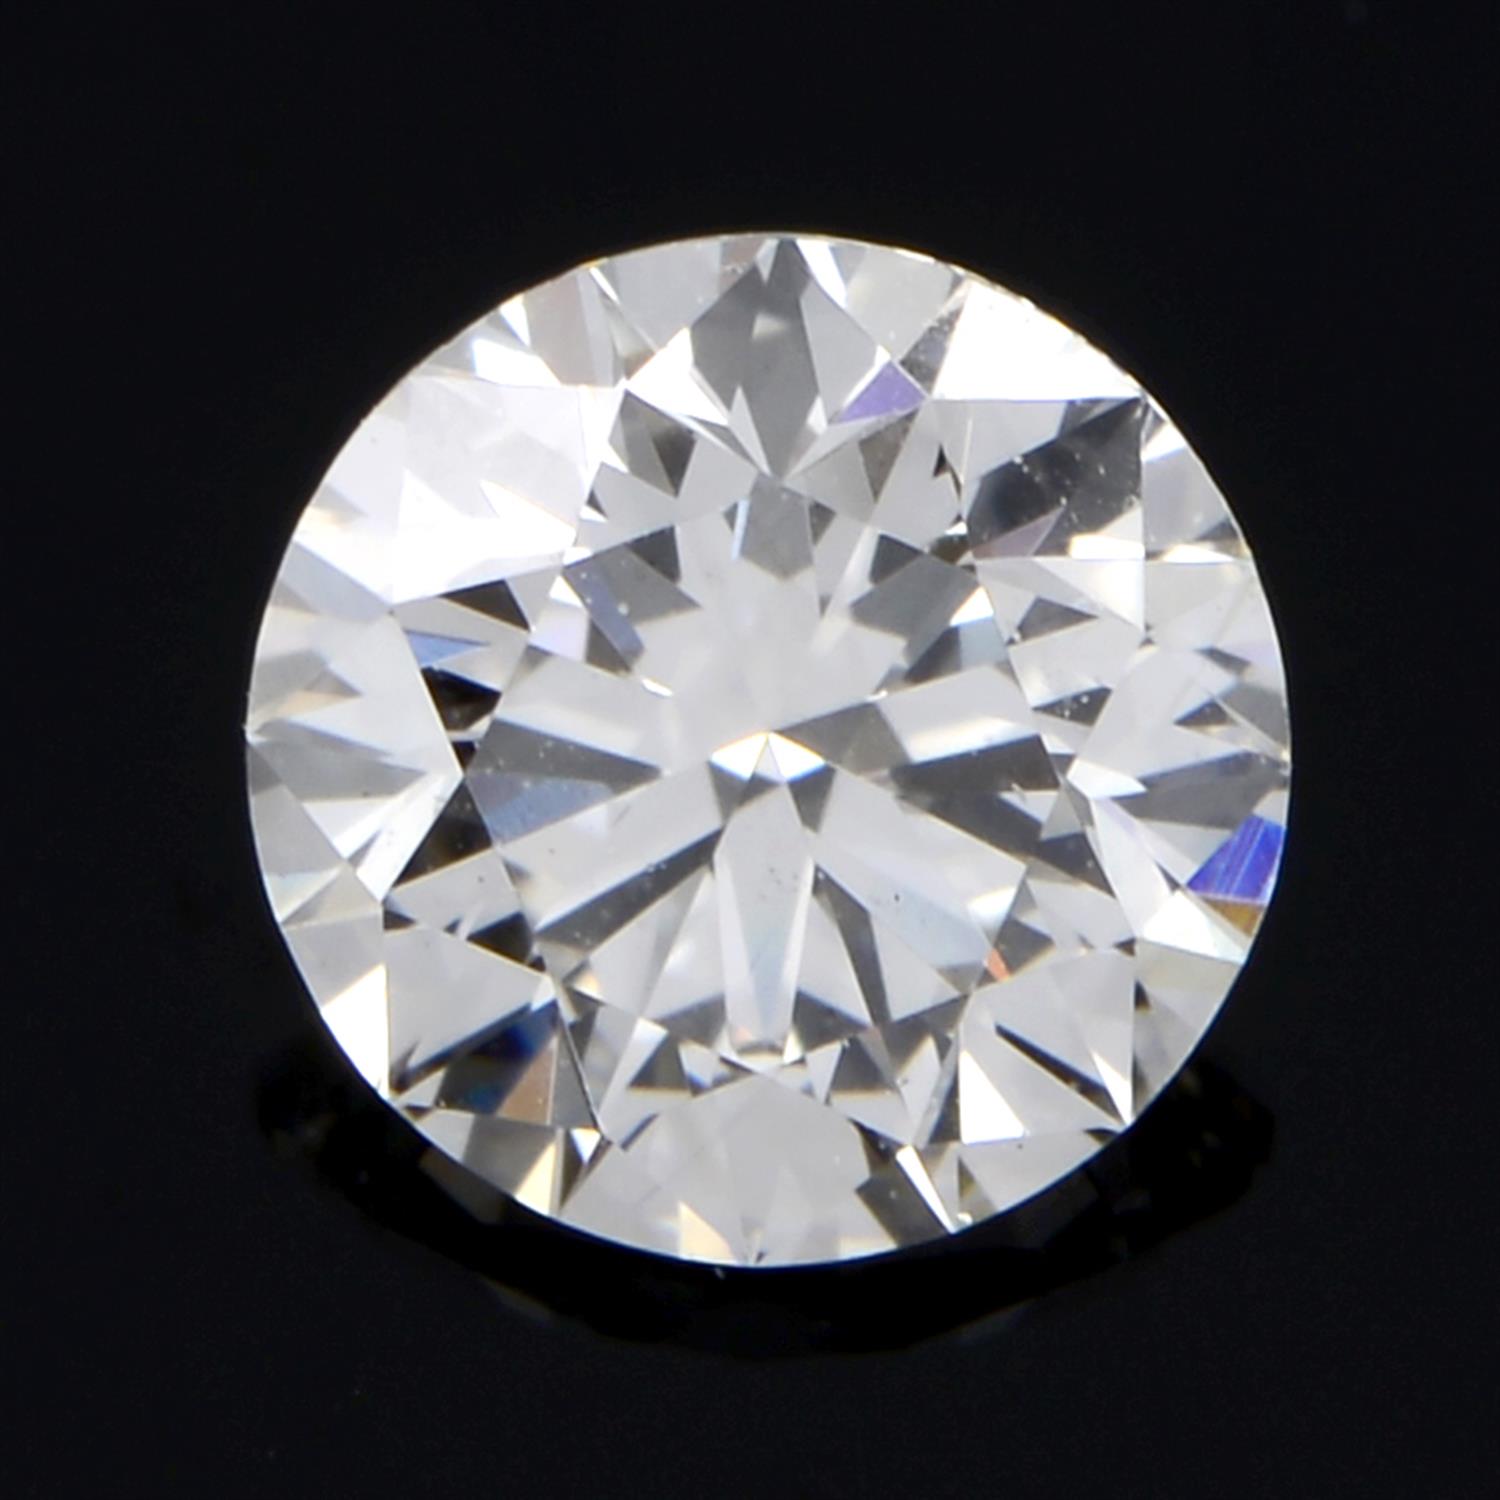 Brilliant-cut diamond, 0.52ct